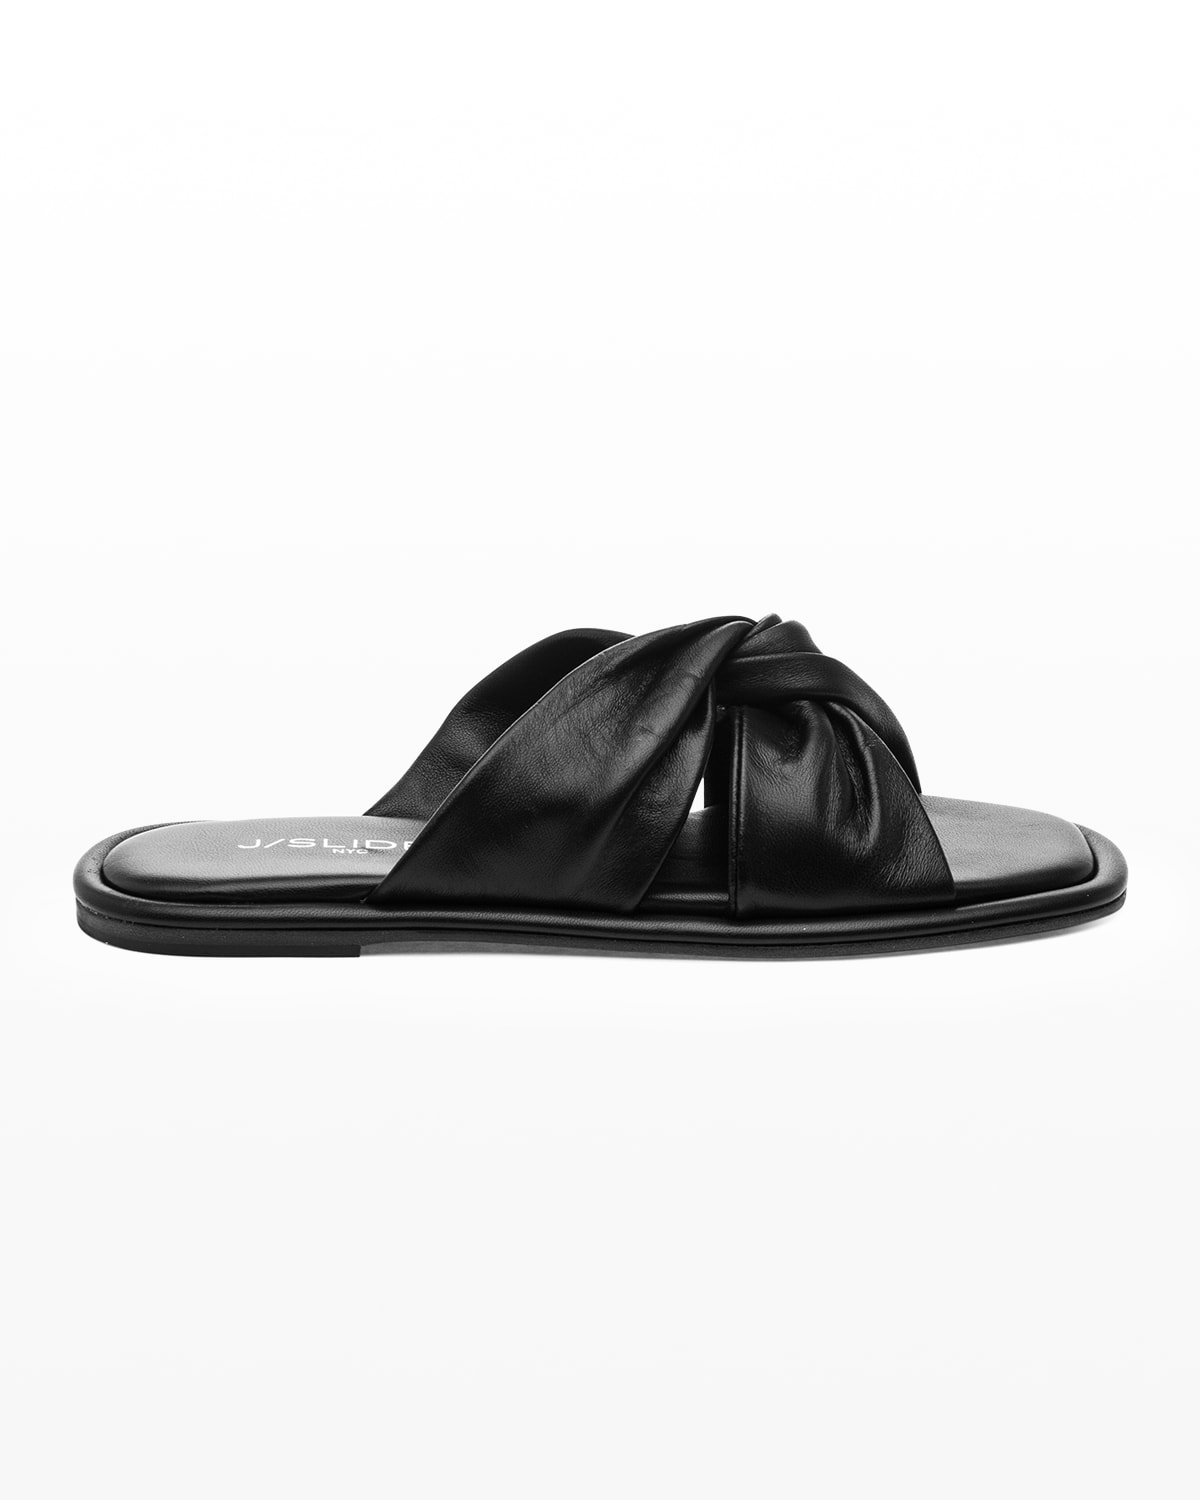 JSlides Yaya Crisscross Leather Flat Sandals